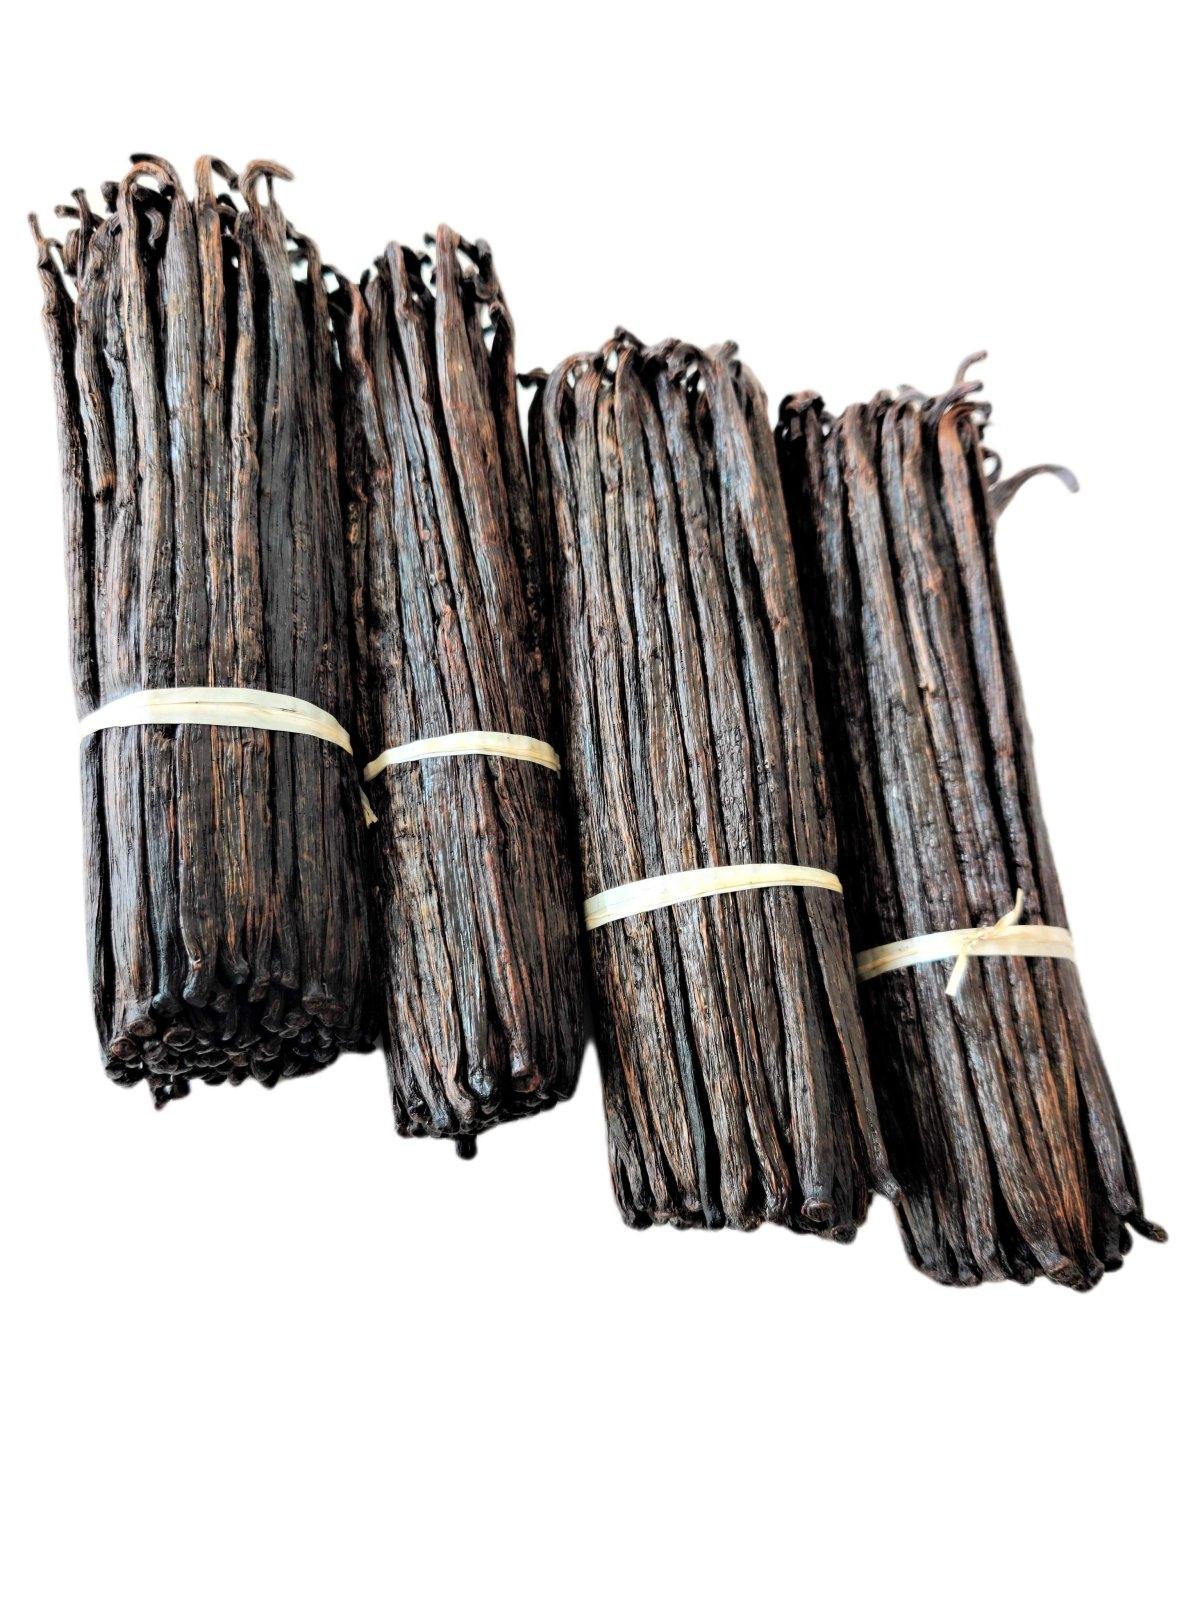 Madagascar Bourbon Extract Grade-B Vanilla Beans<br>For Extract Making<BR>1oz, 3oz, 5oz, 10oz, 20oz, 30oz - Spice-Land Wholesale